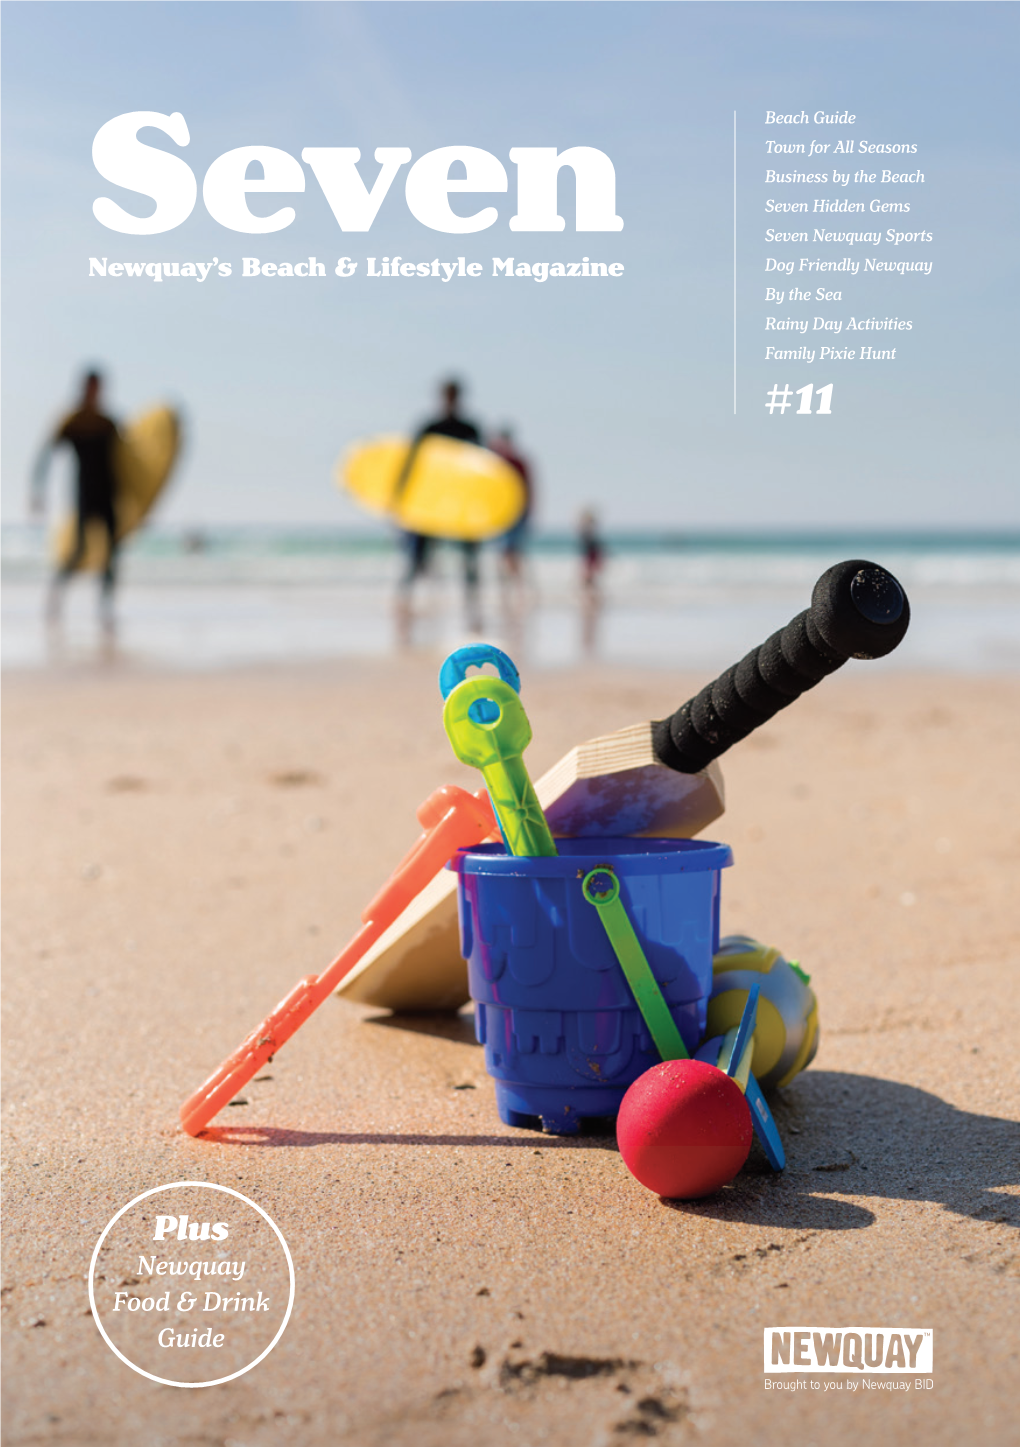 Newquay's Beach & Lifestyle Magazine Newquay Food & Drink